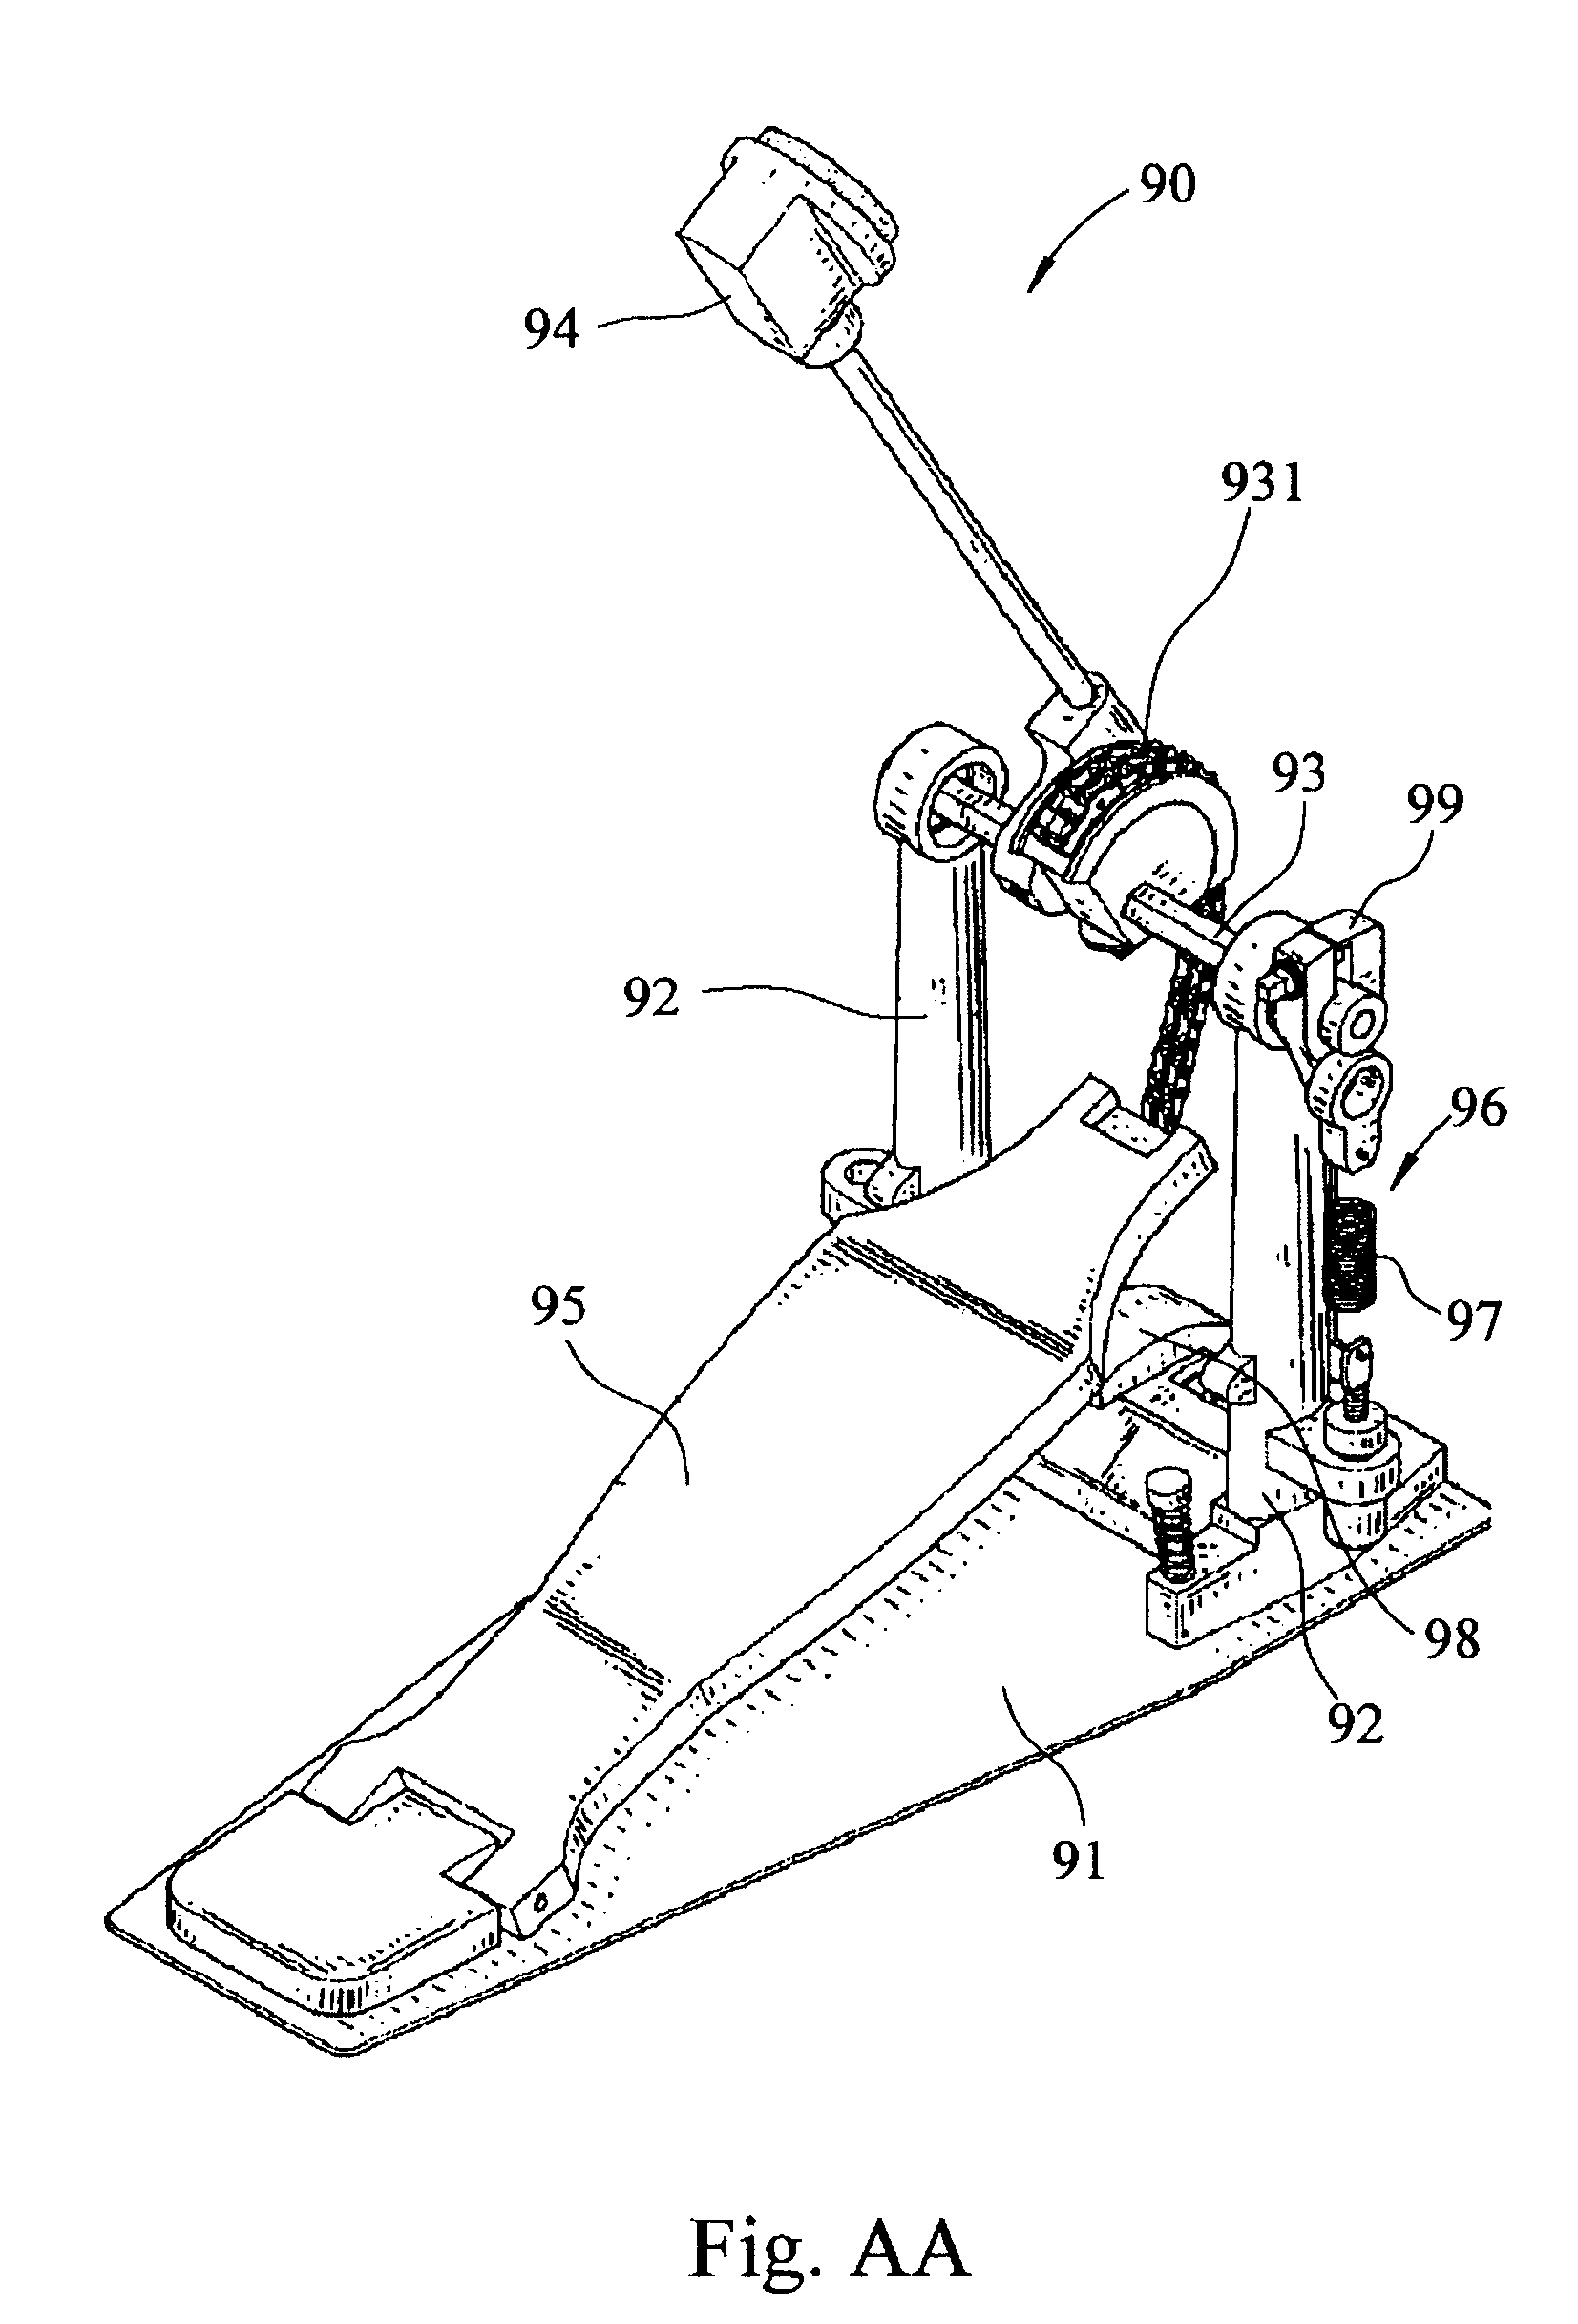 Modular single-tower drum pedal system